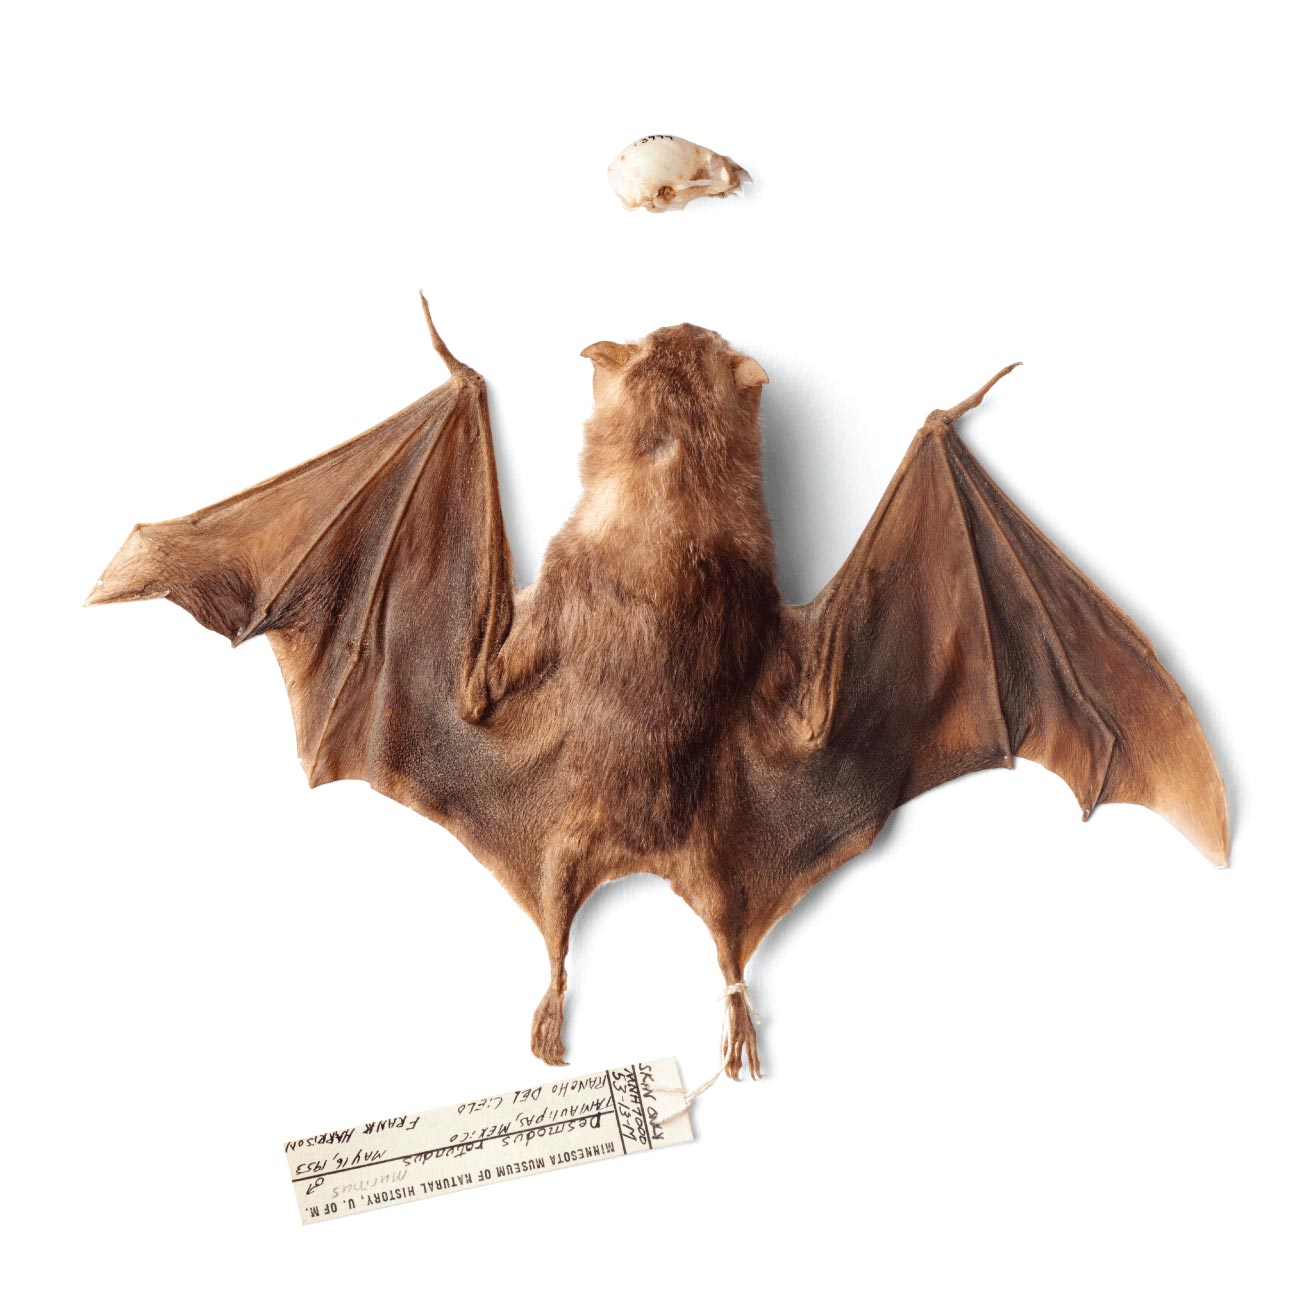 Vampire bat specimen